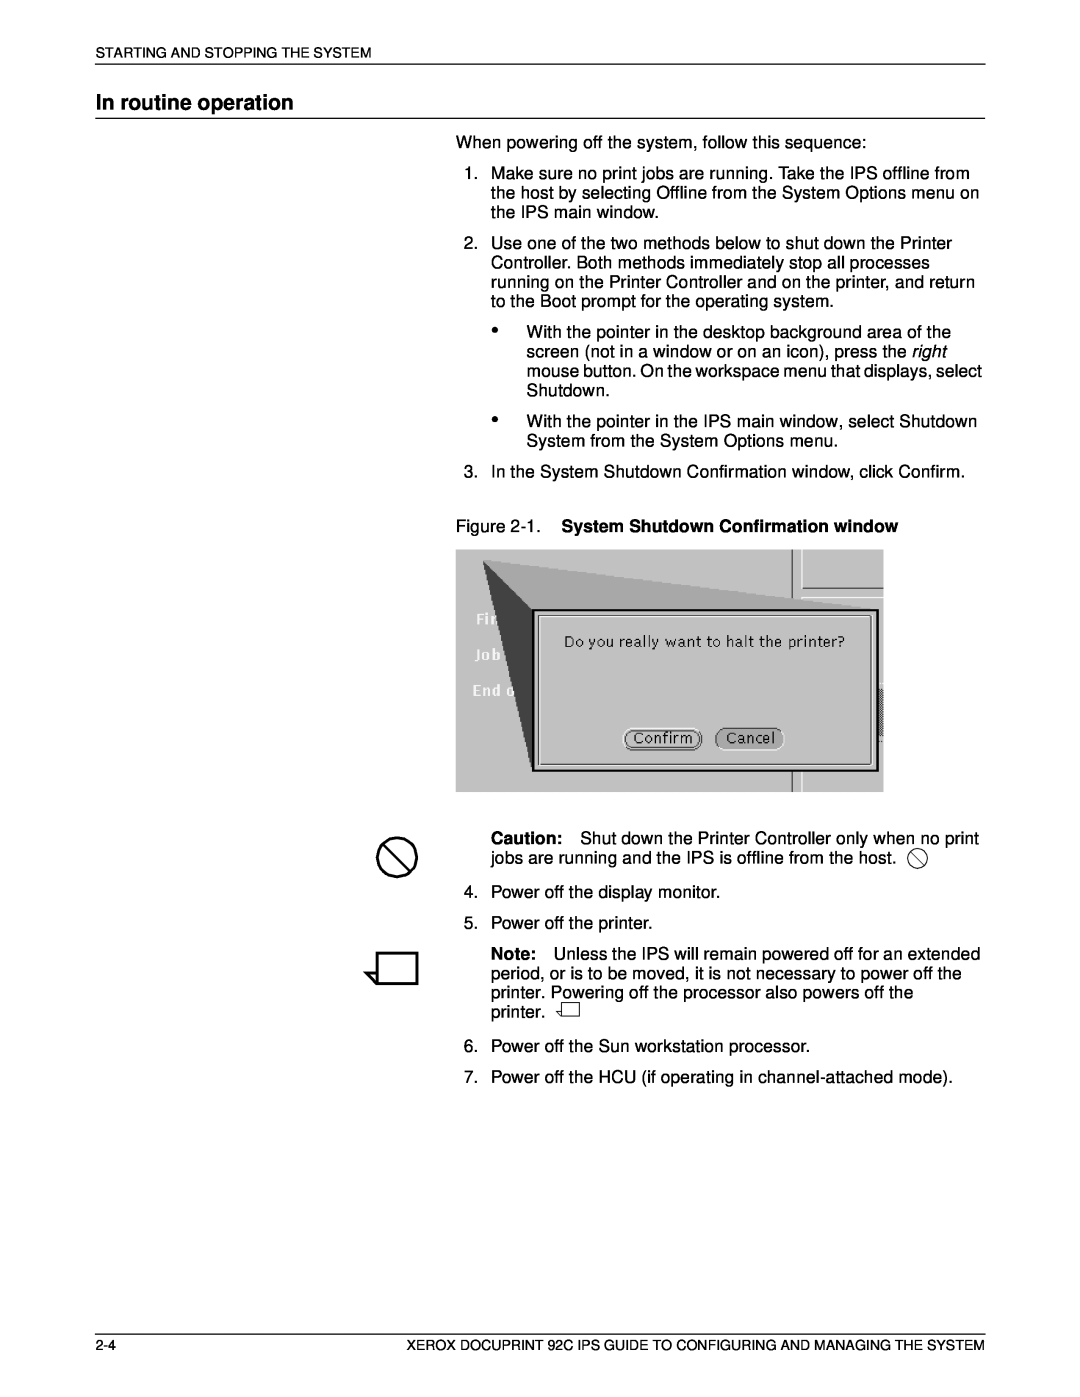 Xerox 92C IPS manual In routine operation, 1. System Shutdown Confirmation window 